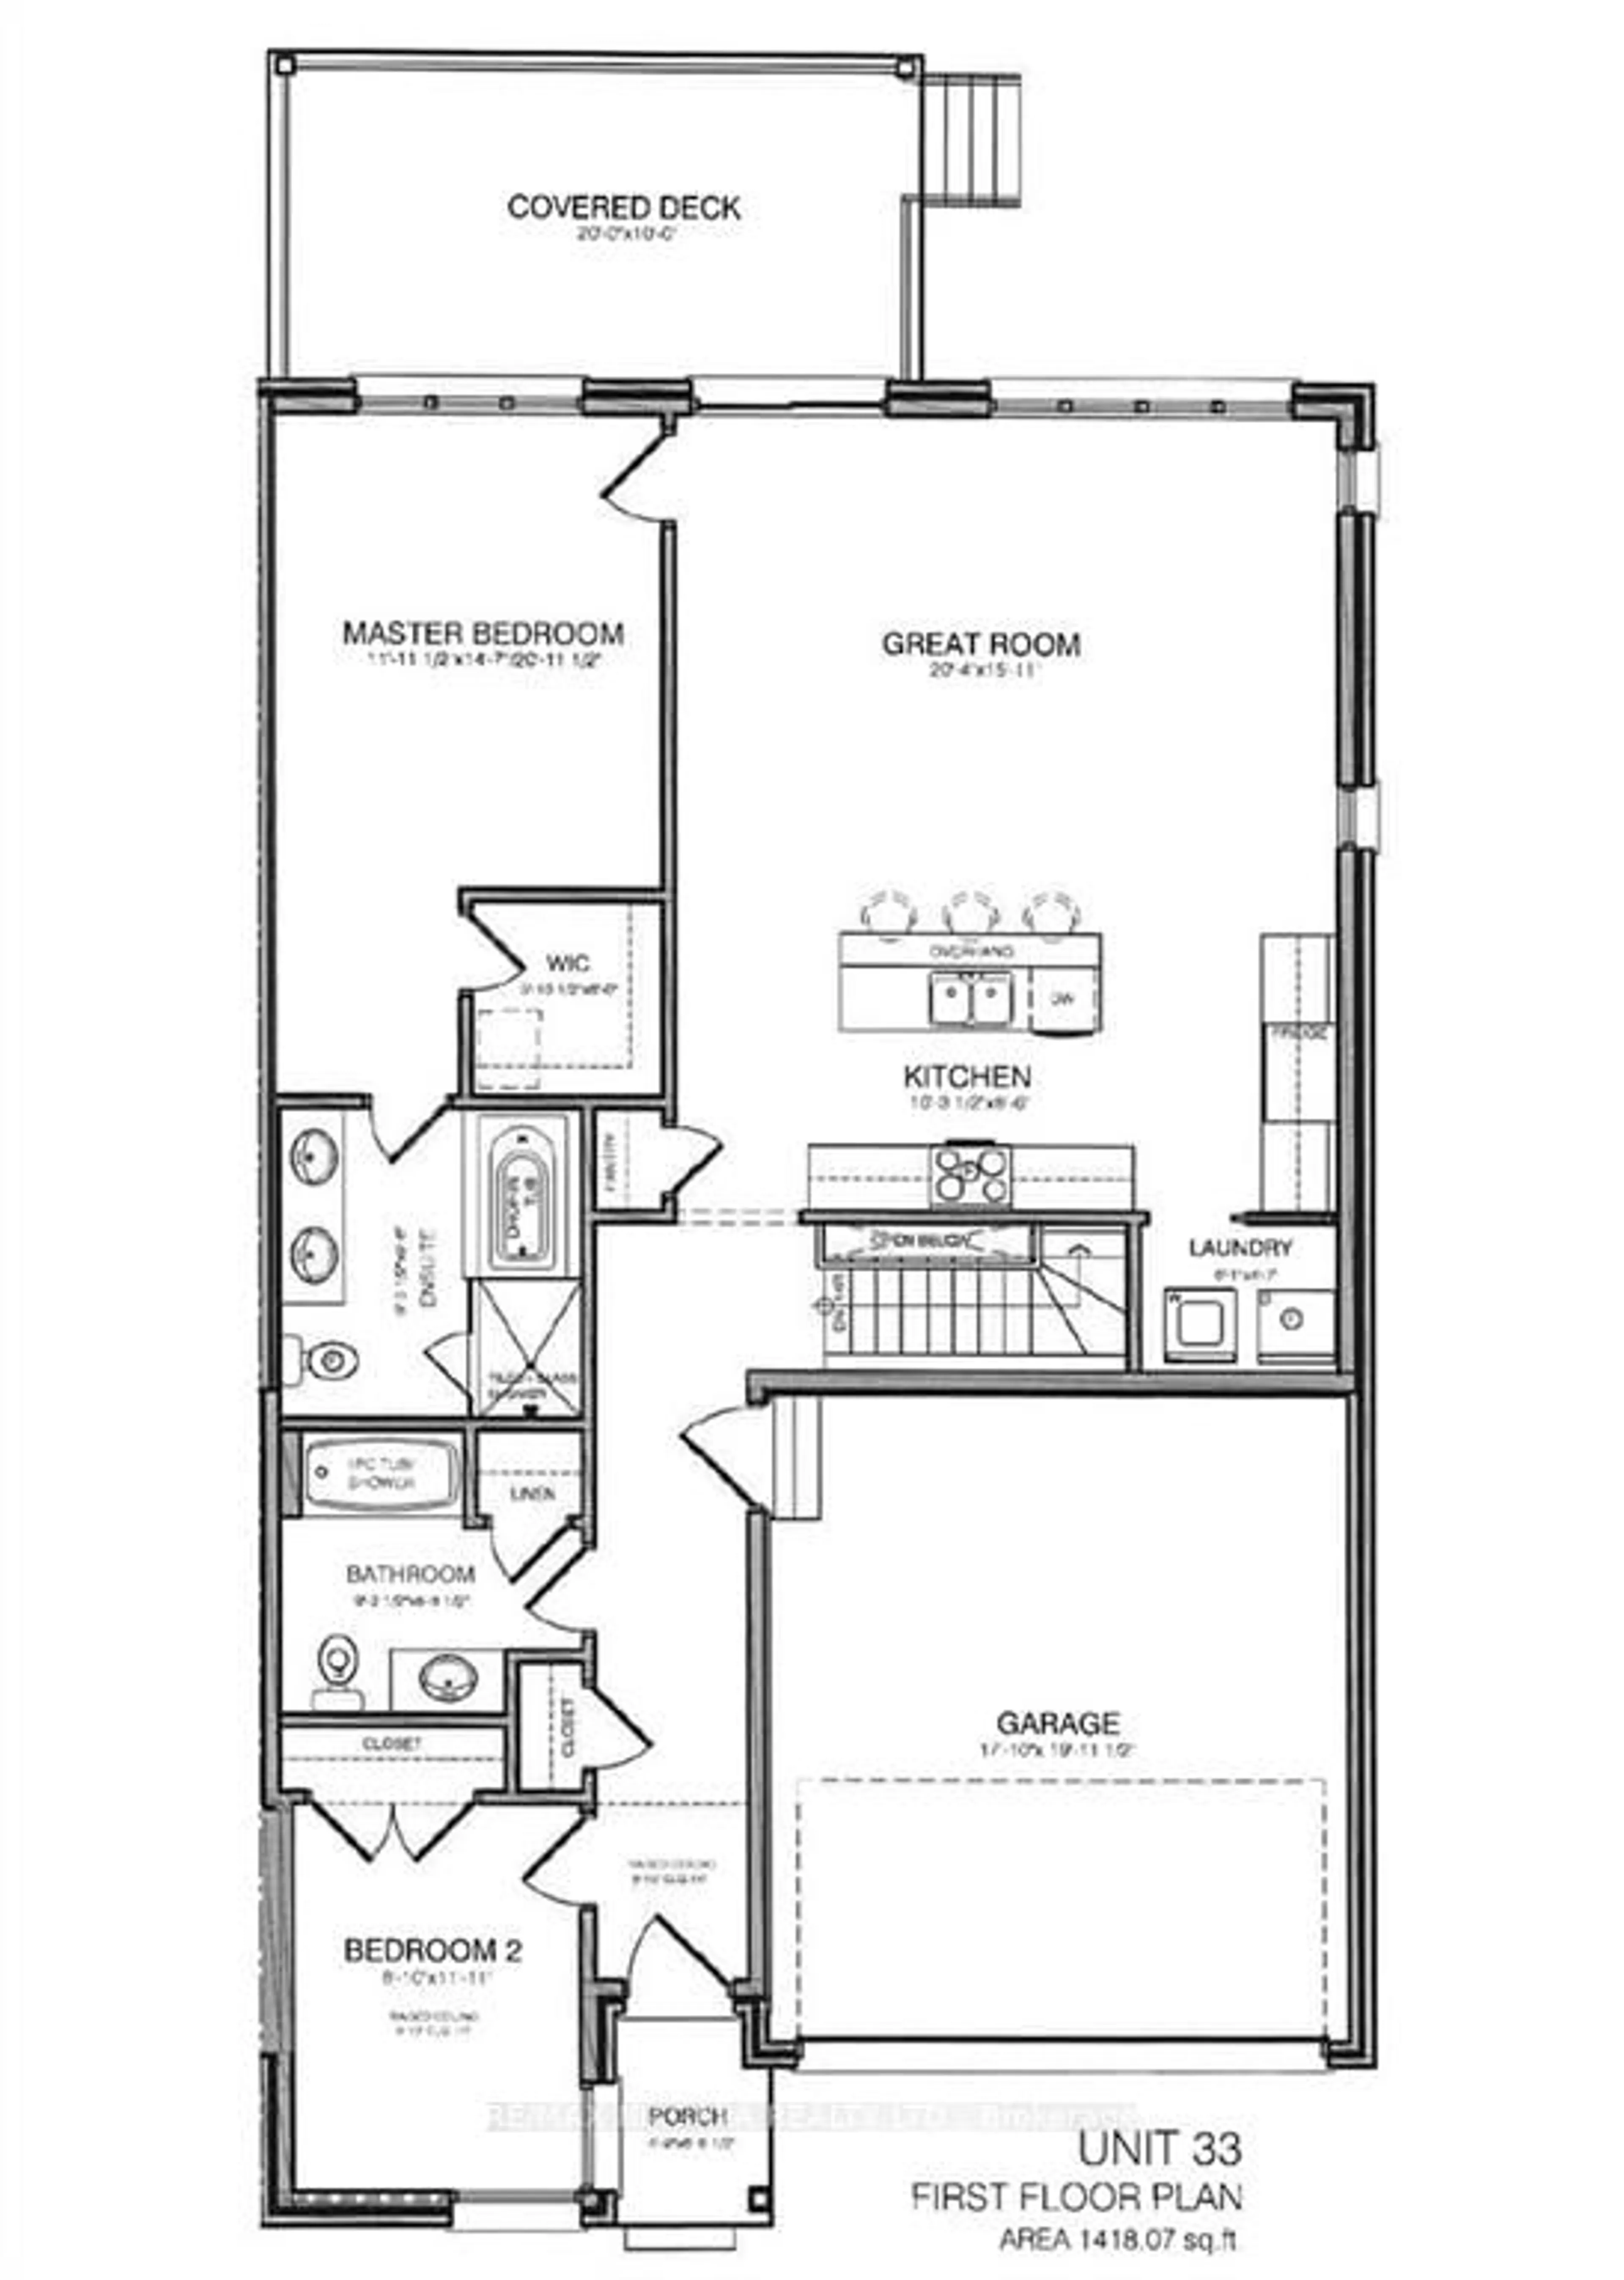 Floor plan for 8974 Wiiloughby Dr #33, Niagara Falls Ontario L2G 0Y8